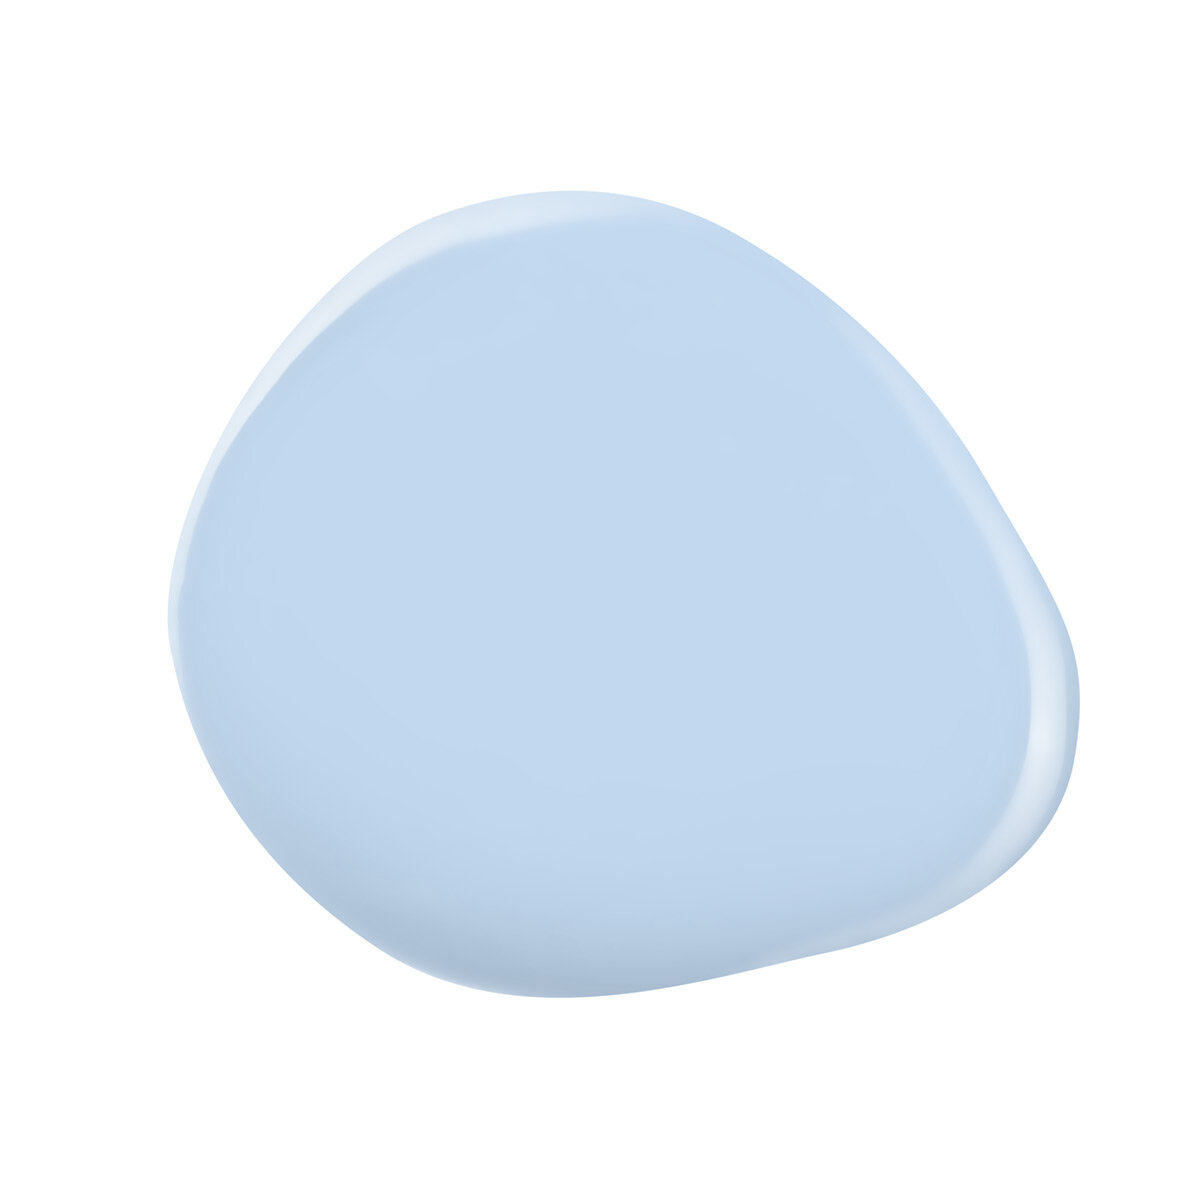 KINETICS Keramický bázový gel lak - SHIELD (HEMA FREE) - Pastel Blue #923 - 15 ml